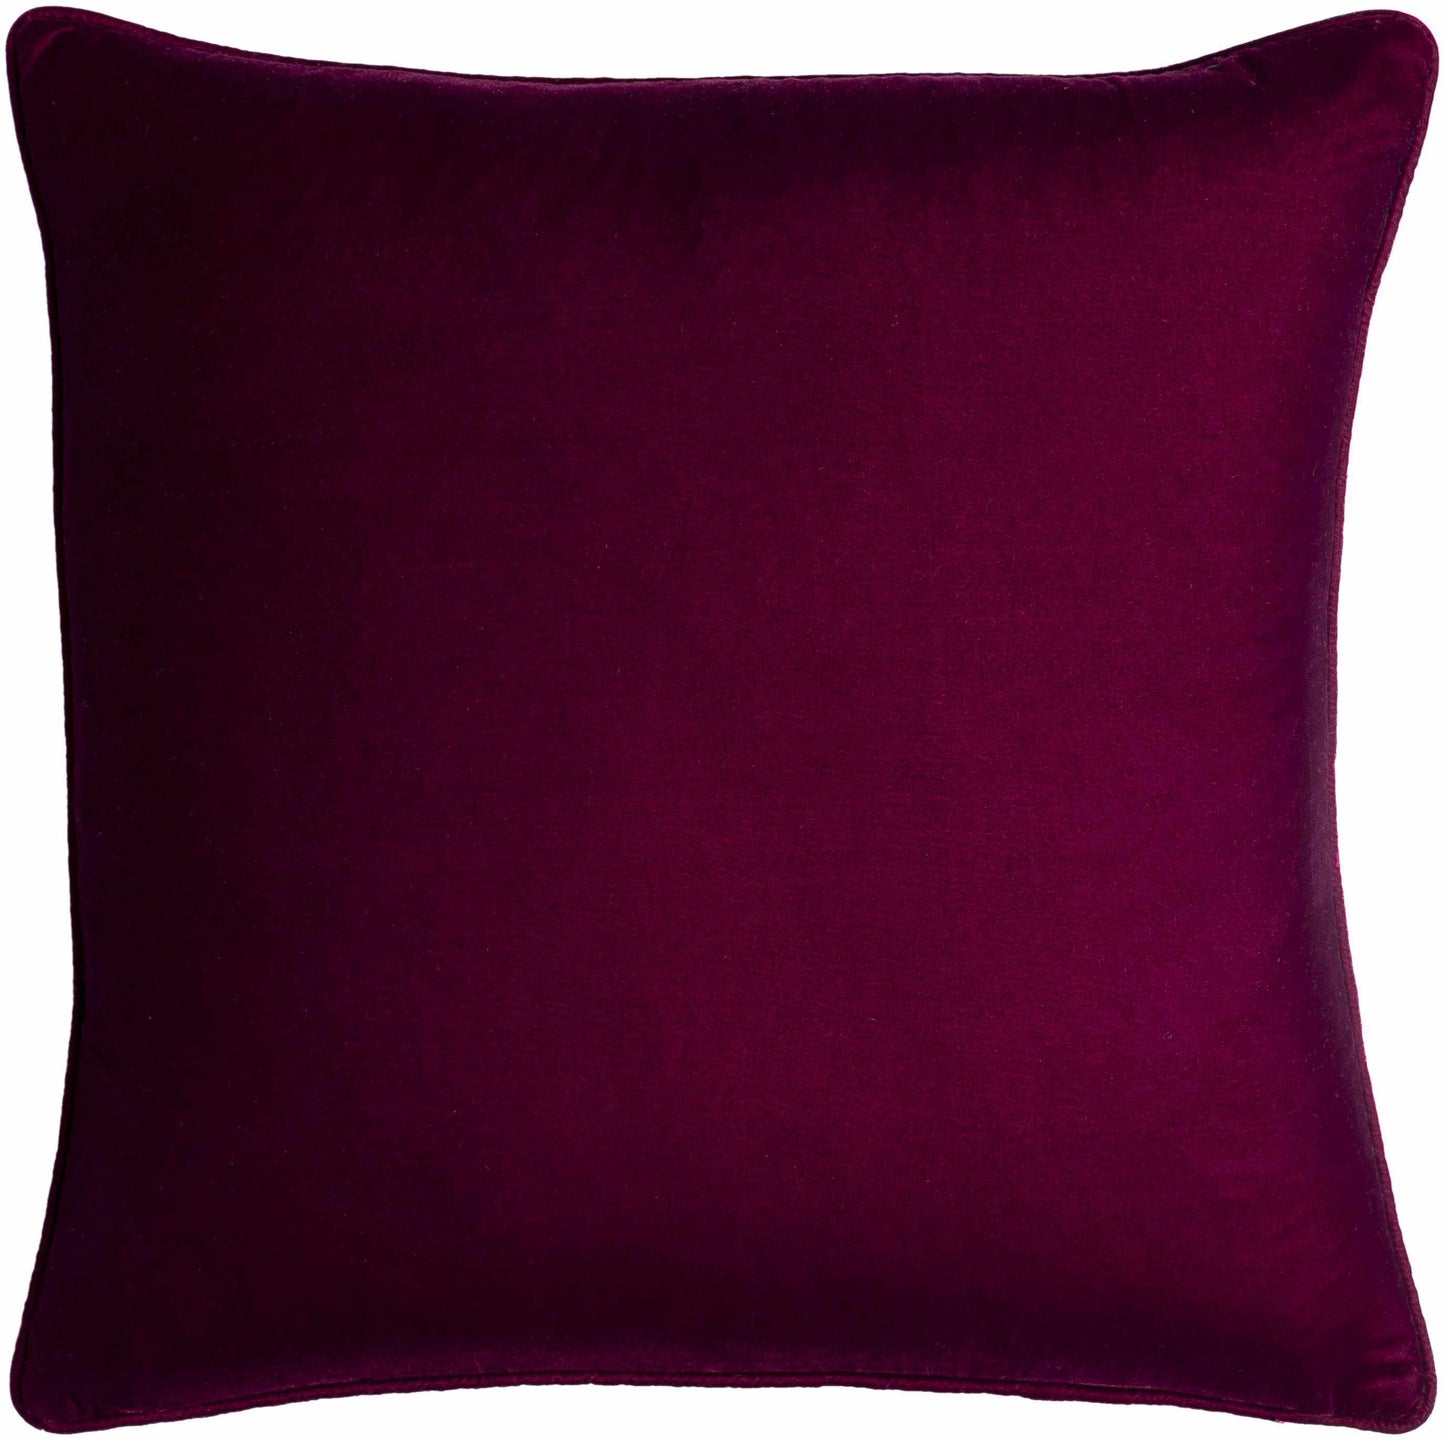 Perg Dark Purple Pillow Cover